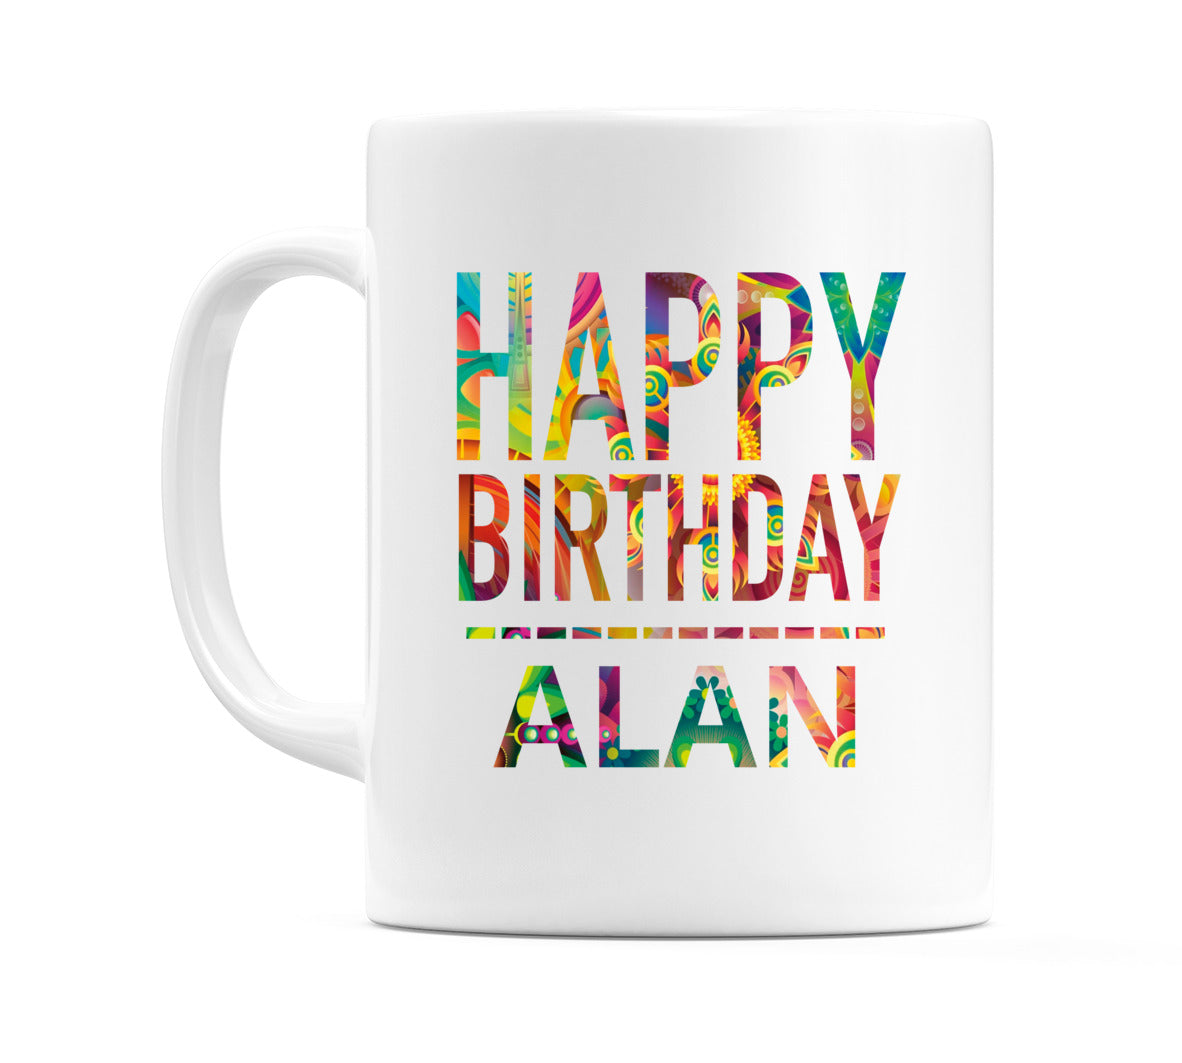 Happy Birthday Alan (Tie Dye Effect) Mug Cup by WeDoMugs